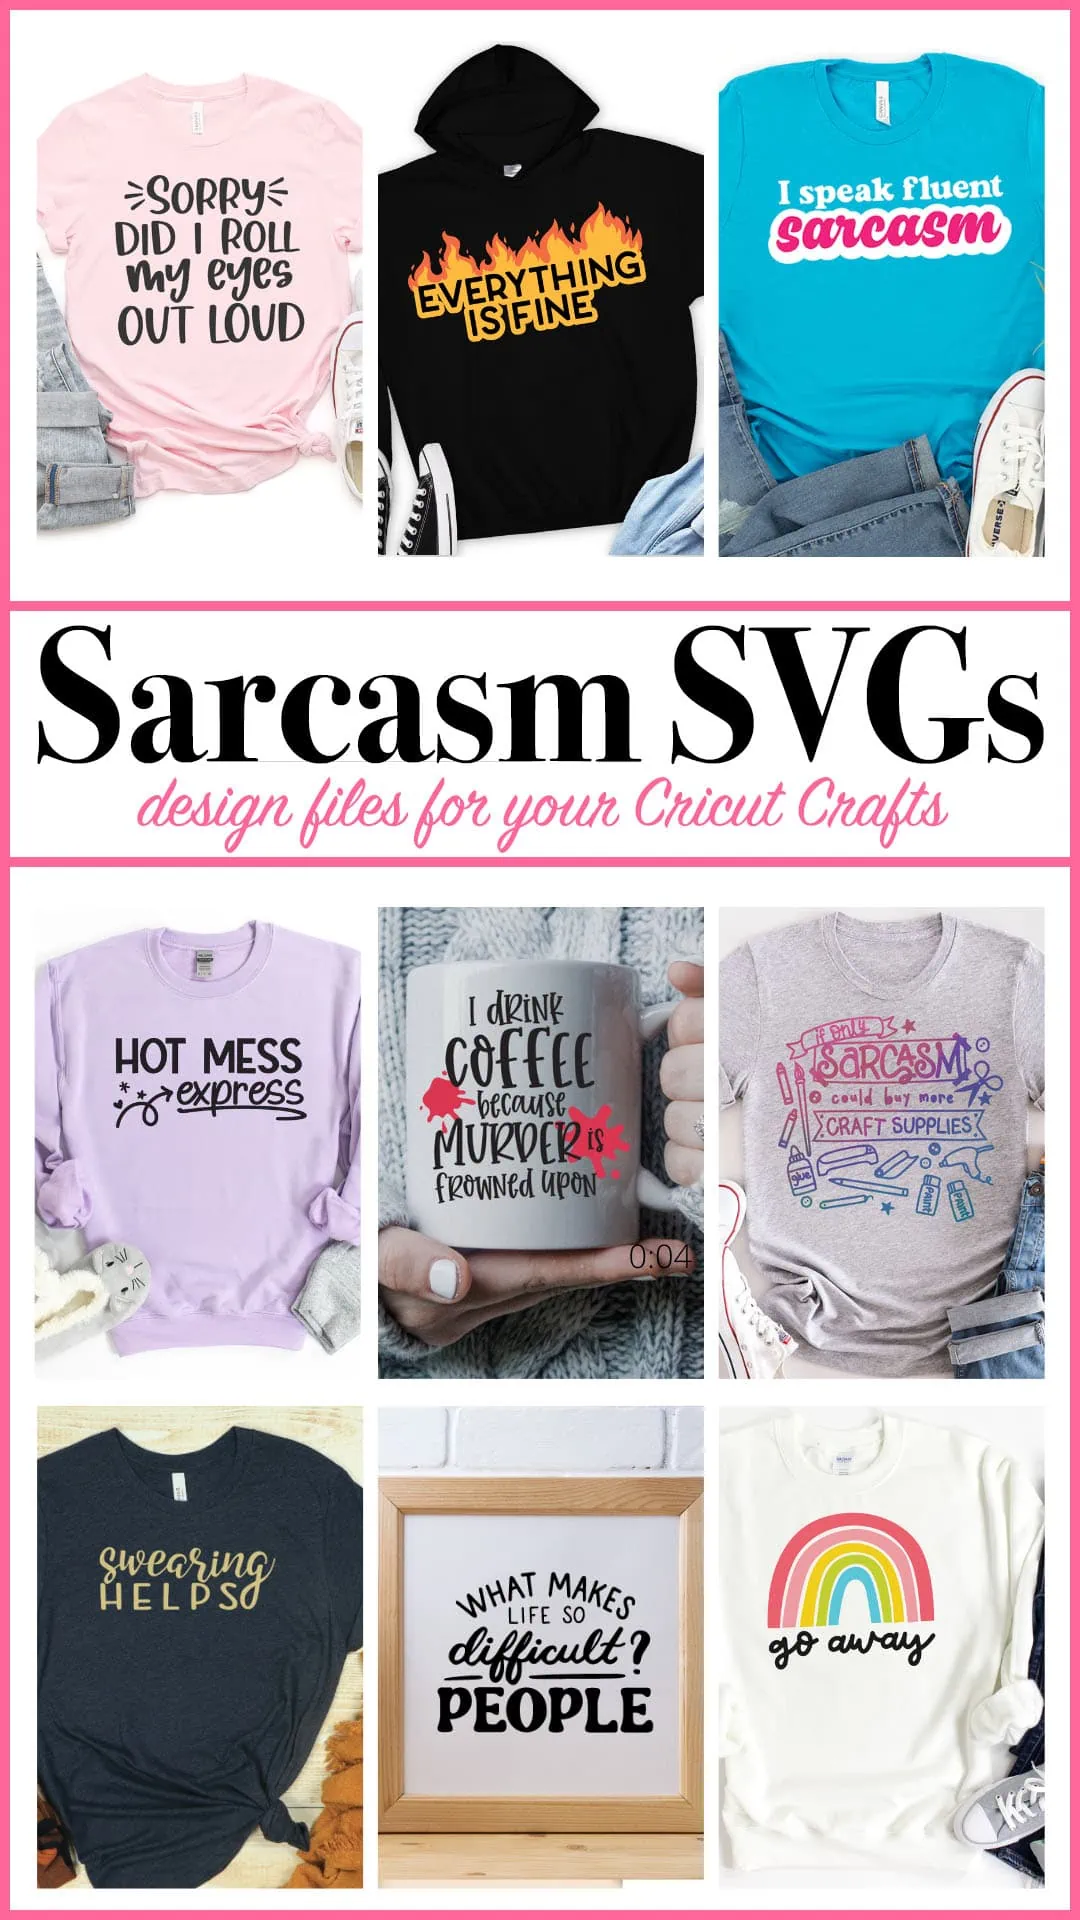 Sarcastic SVG designs for Cricut crafts